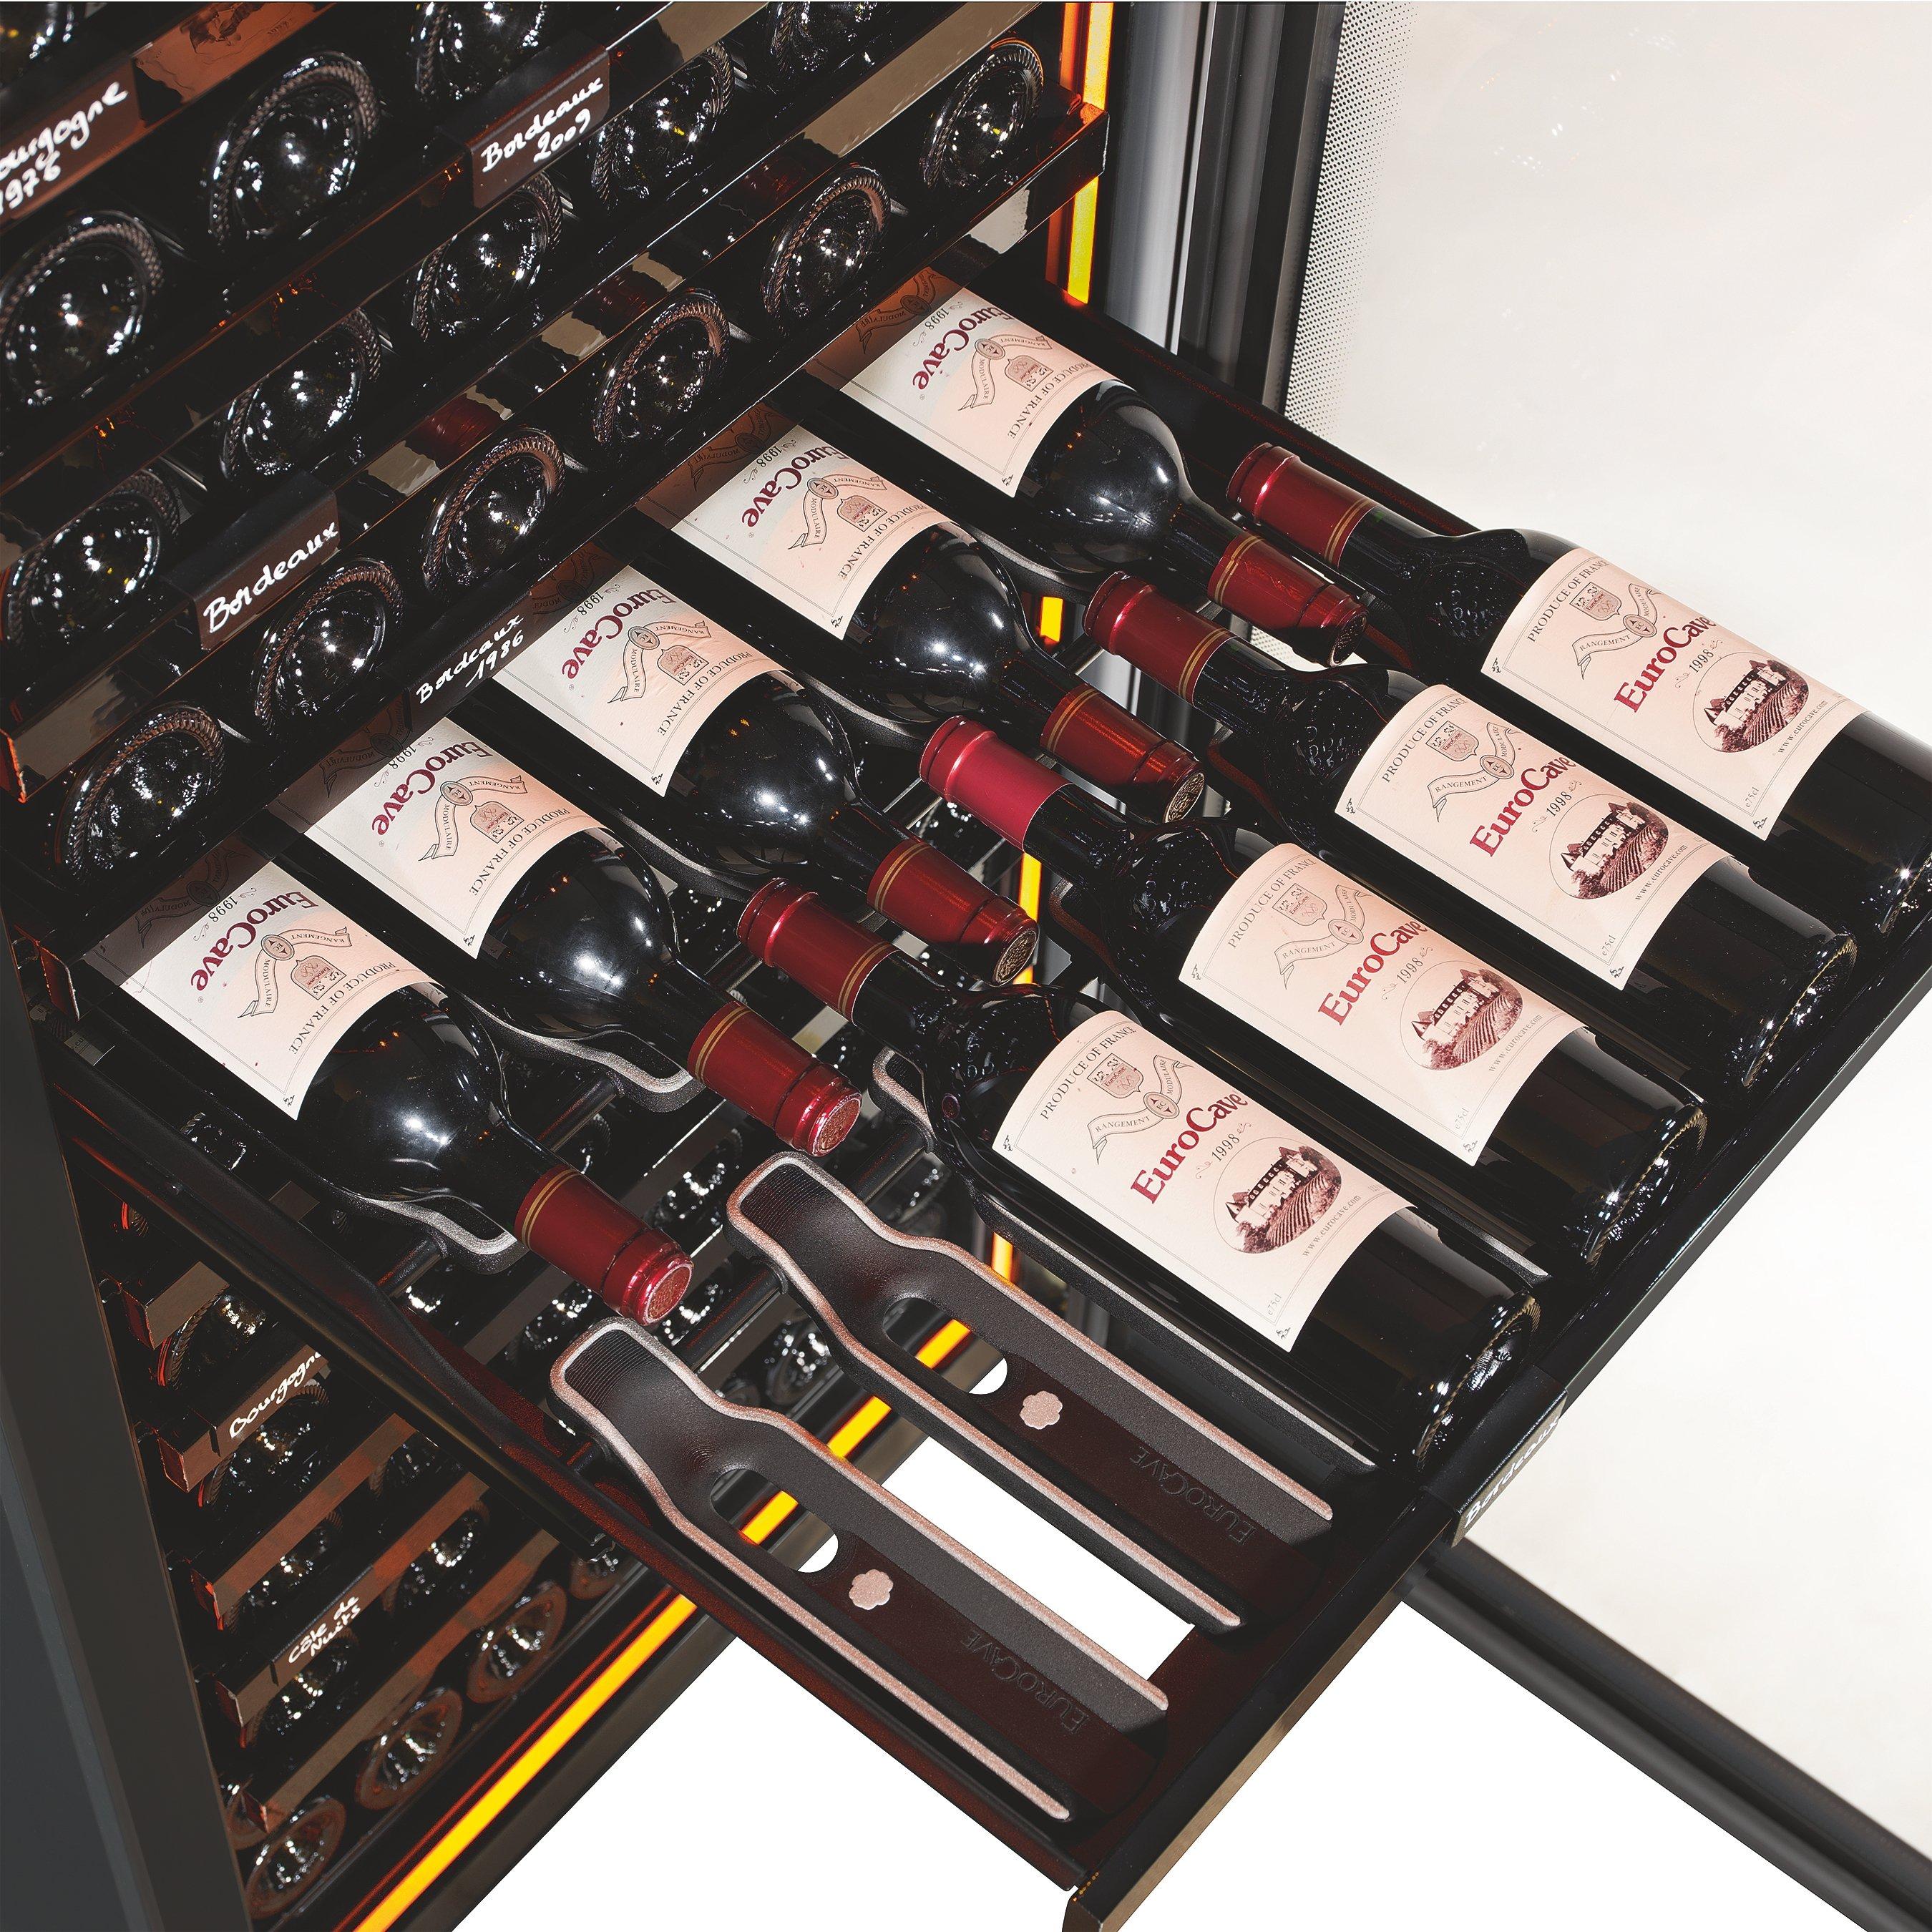 Wine Sampler Box — ICELLARS